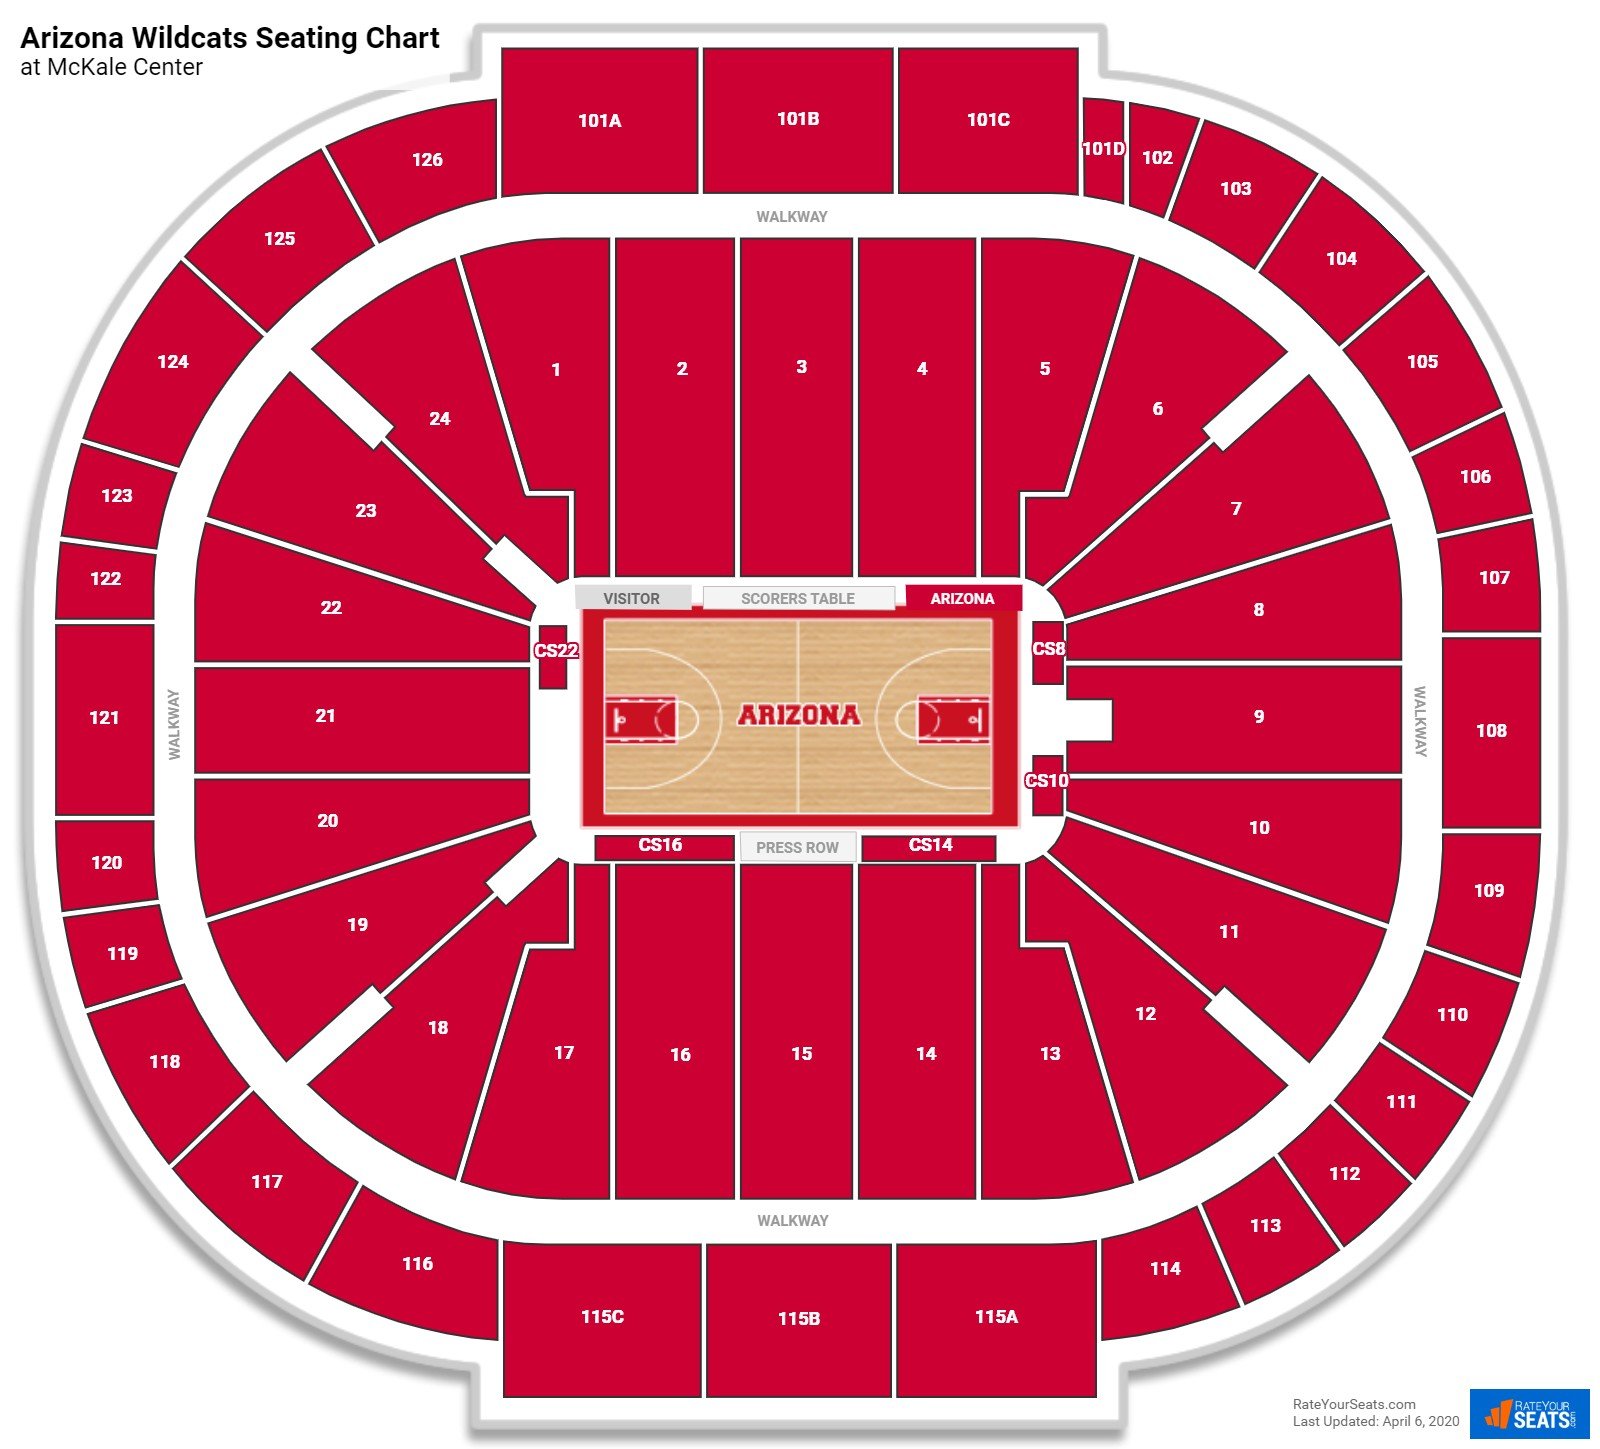 Pitt Basketball Seating Chart